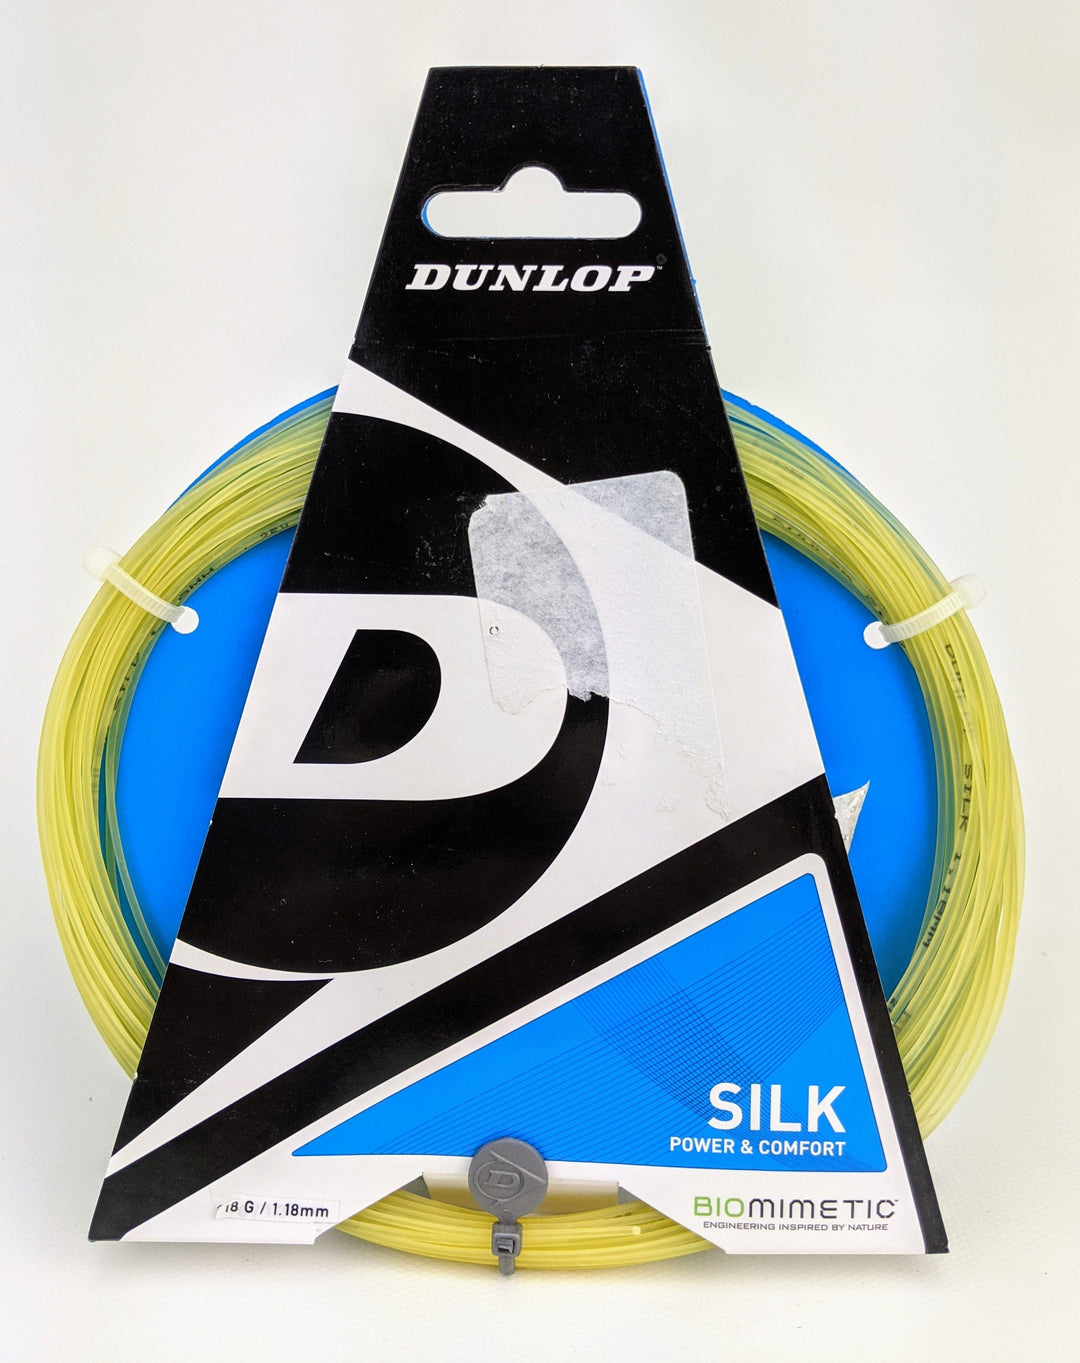 Dunlop Silk 18g Squash String Set Squash Strings Dunlop 